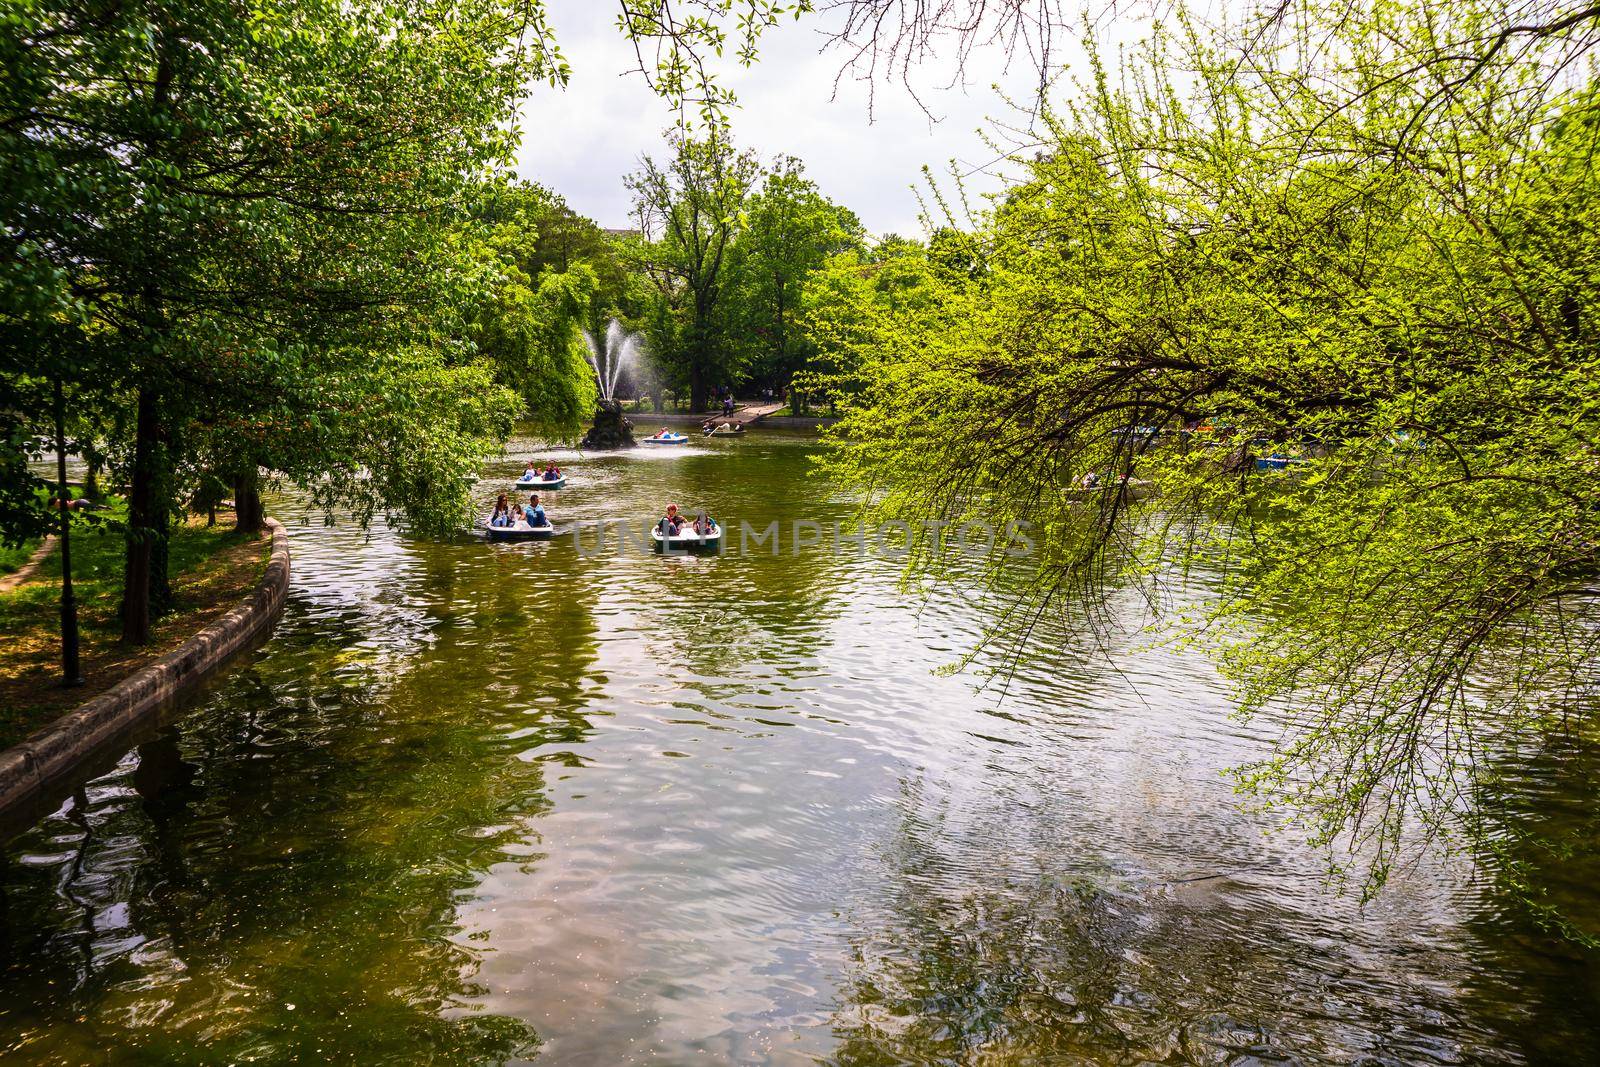 People on pedal boat on lake in Cismigiu Park, Bucharest, Romania, 2020. People walking, having fun, enjoying outdoor in park after quarantine or restrictions of coronavirus. by vladispas